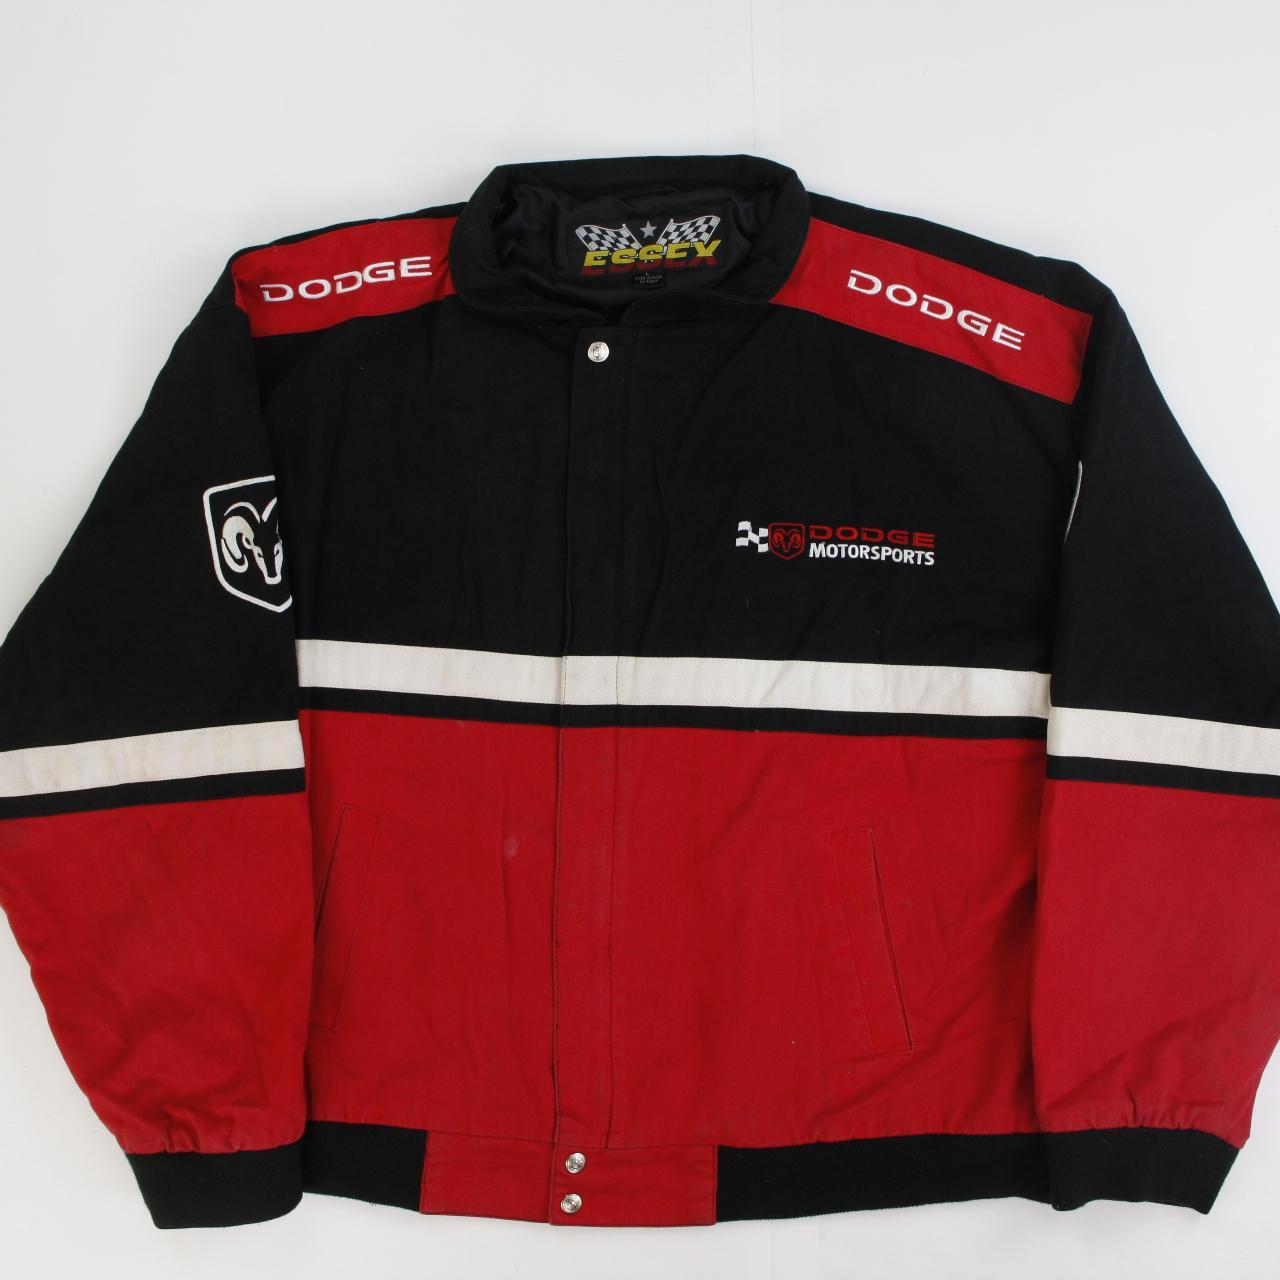 Product Image 3 - Racing Jacket.

Vintage Motorsport Jacket. Driving